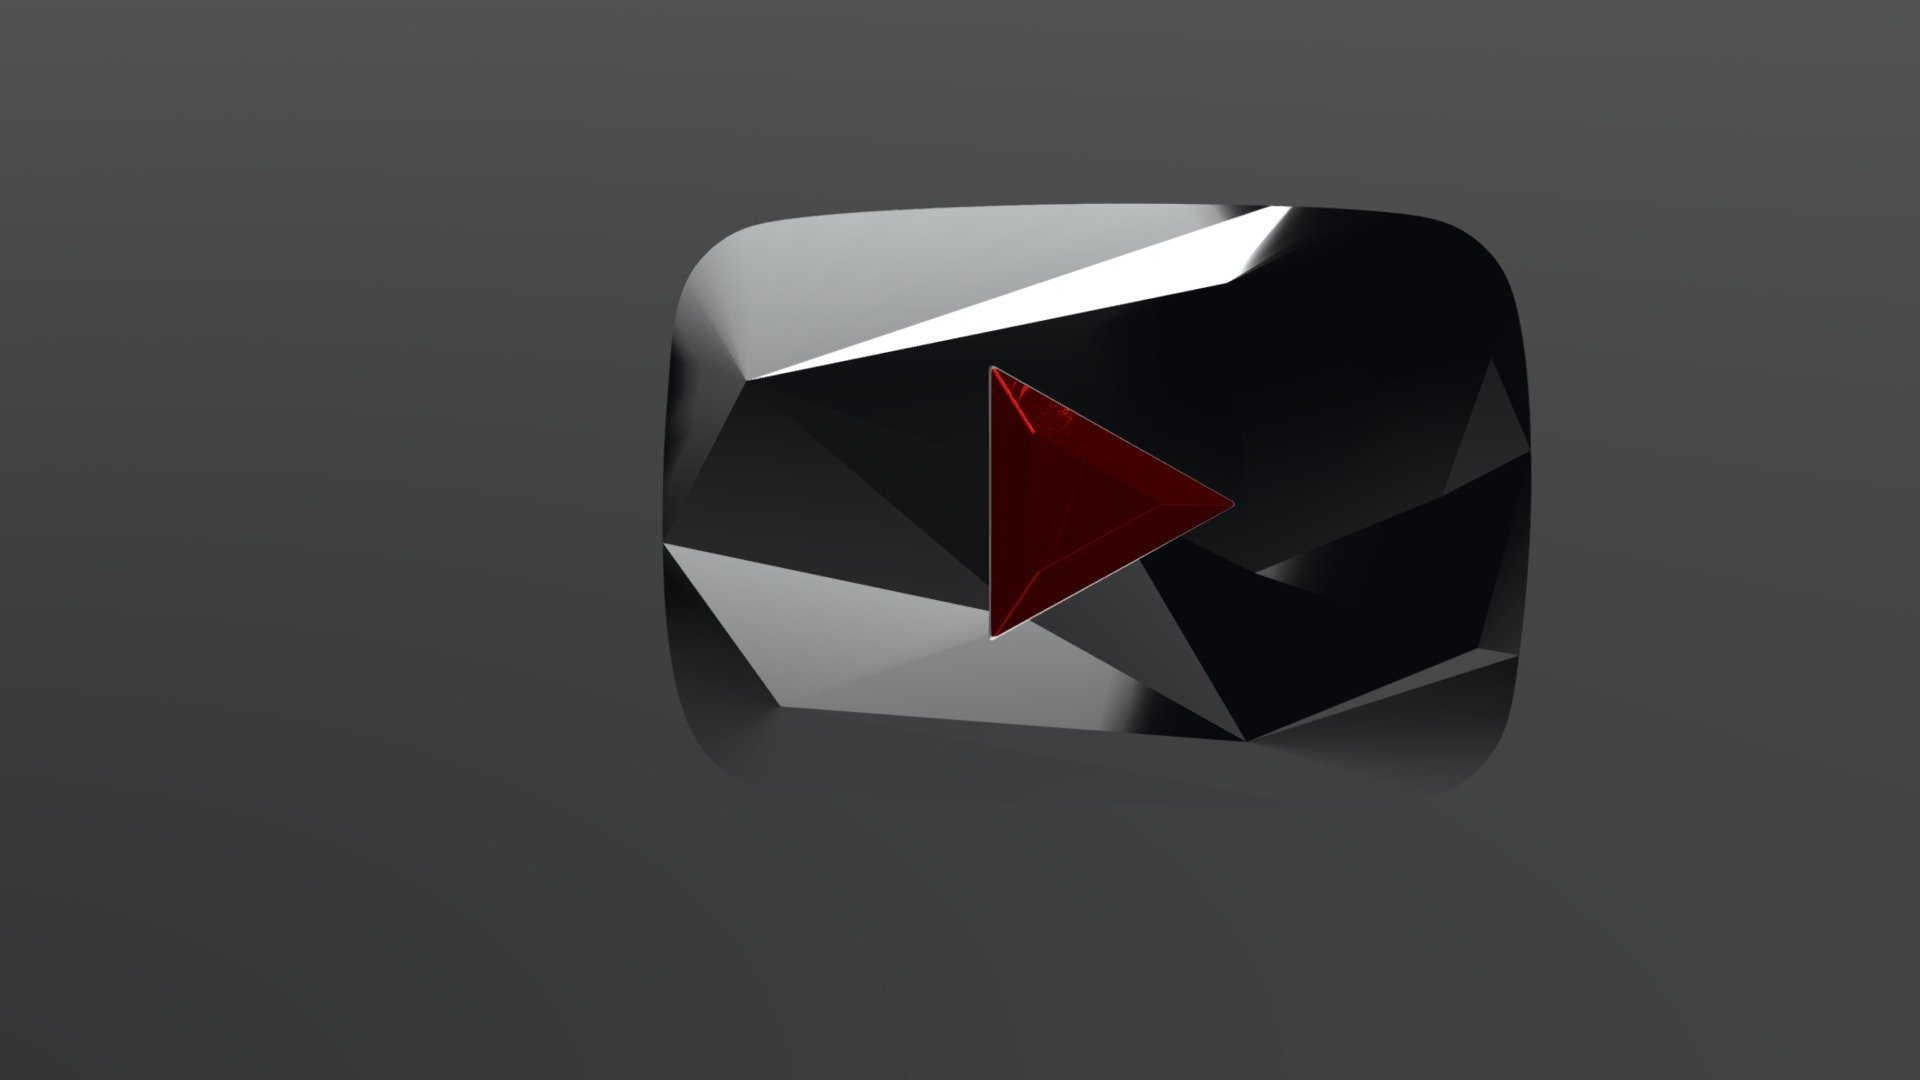 YouTube 100 Million Red Diamond Play Button Model By Jason Kovac [b937995]